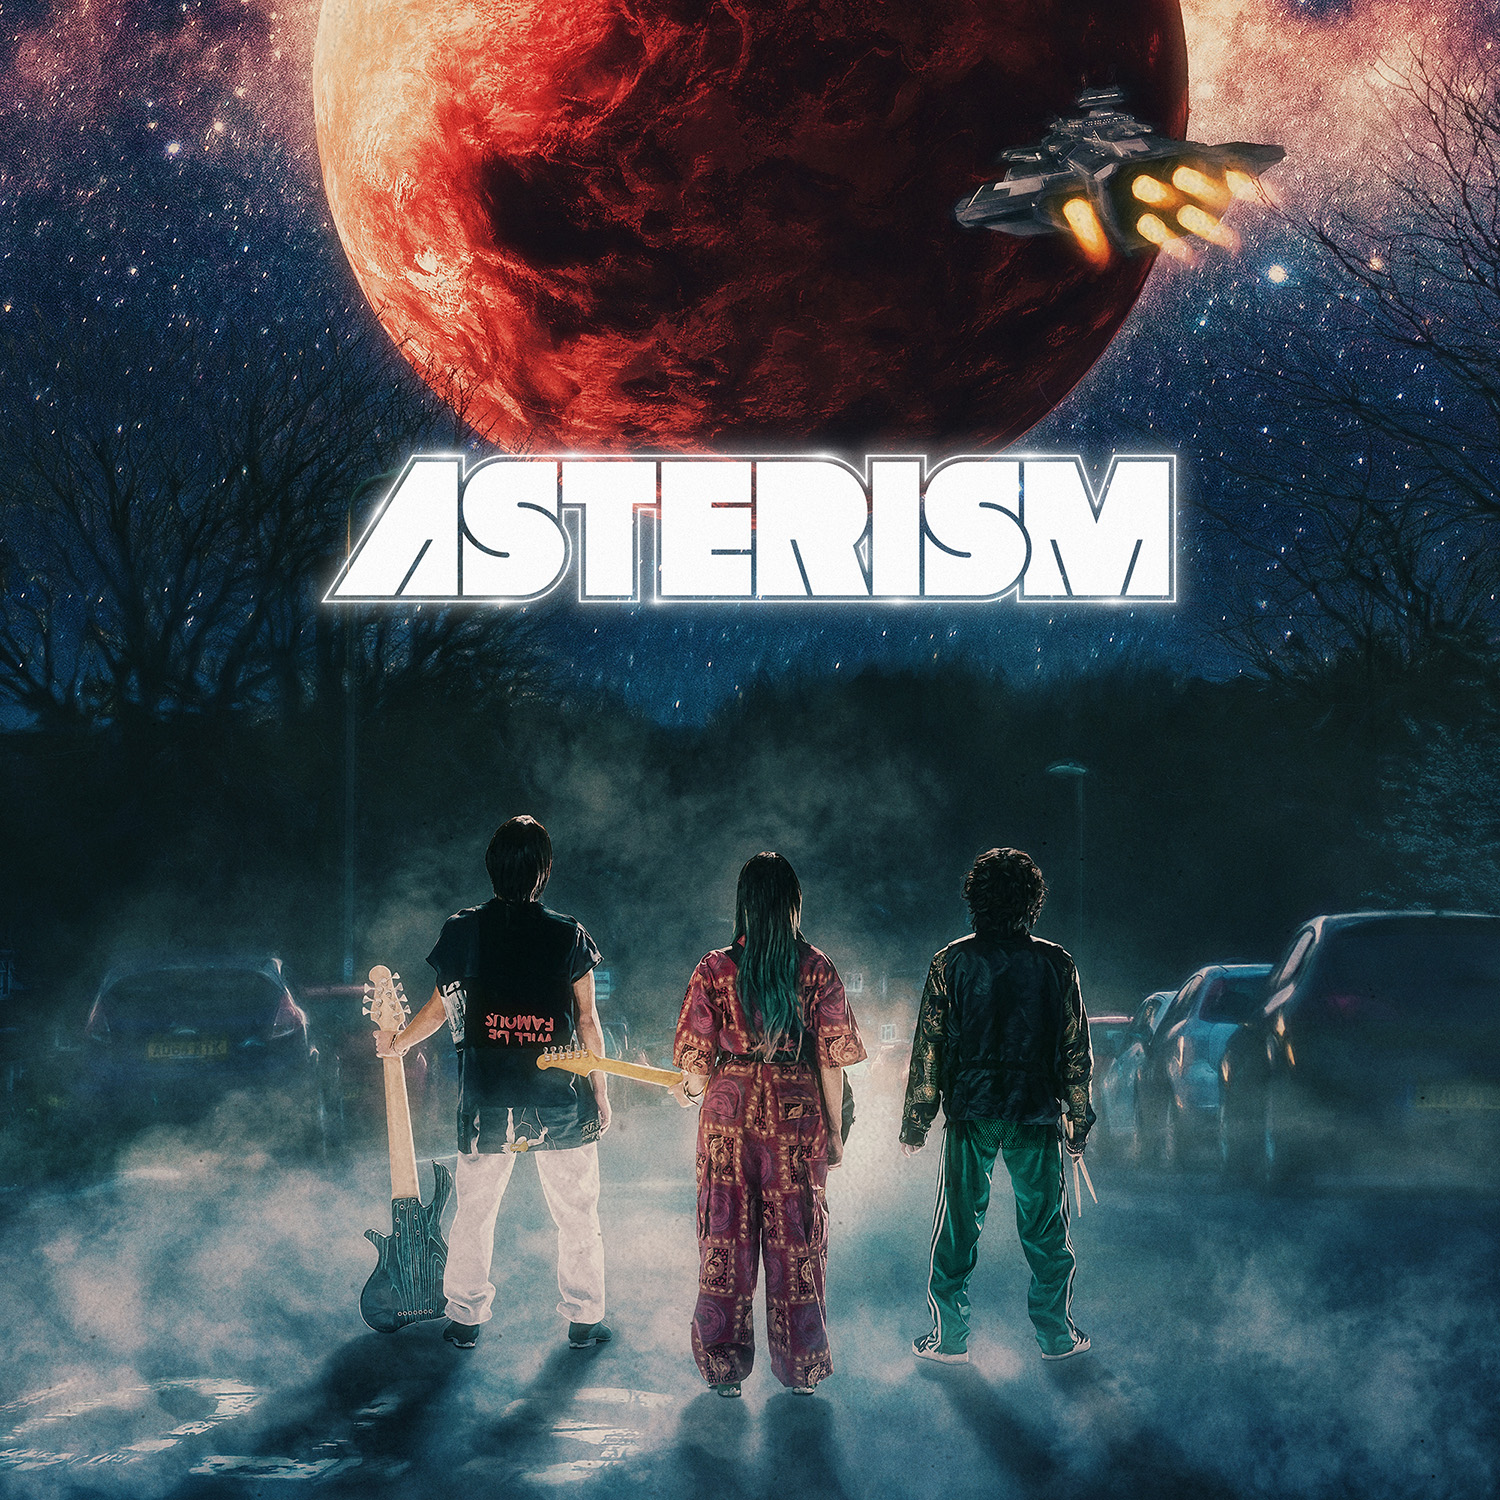 ASTERISM animetic